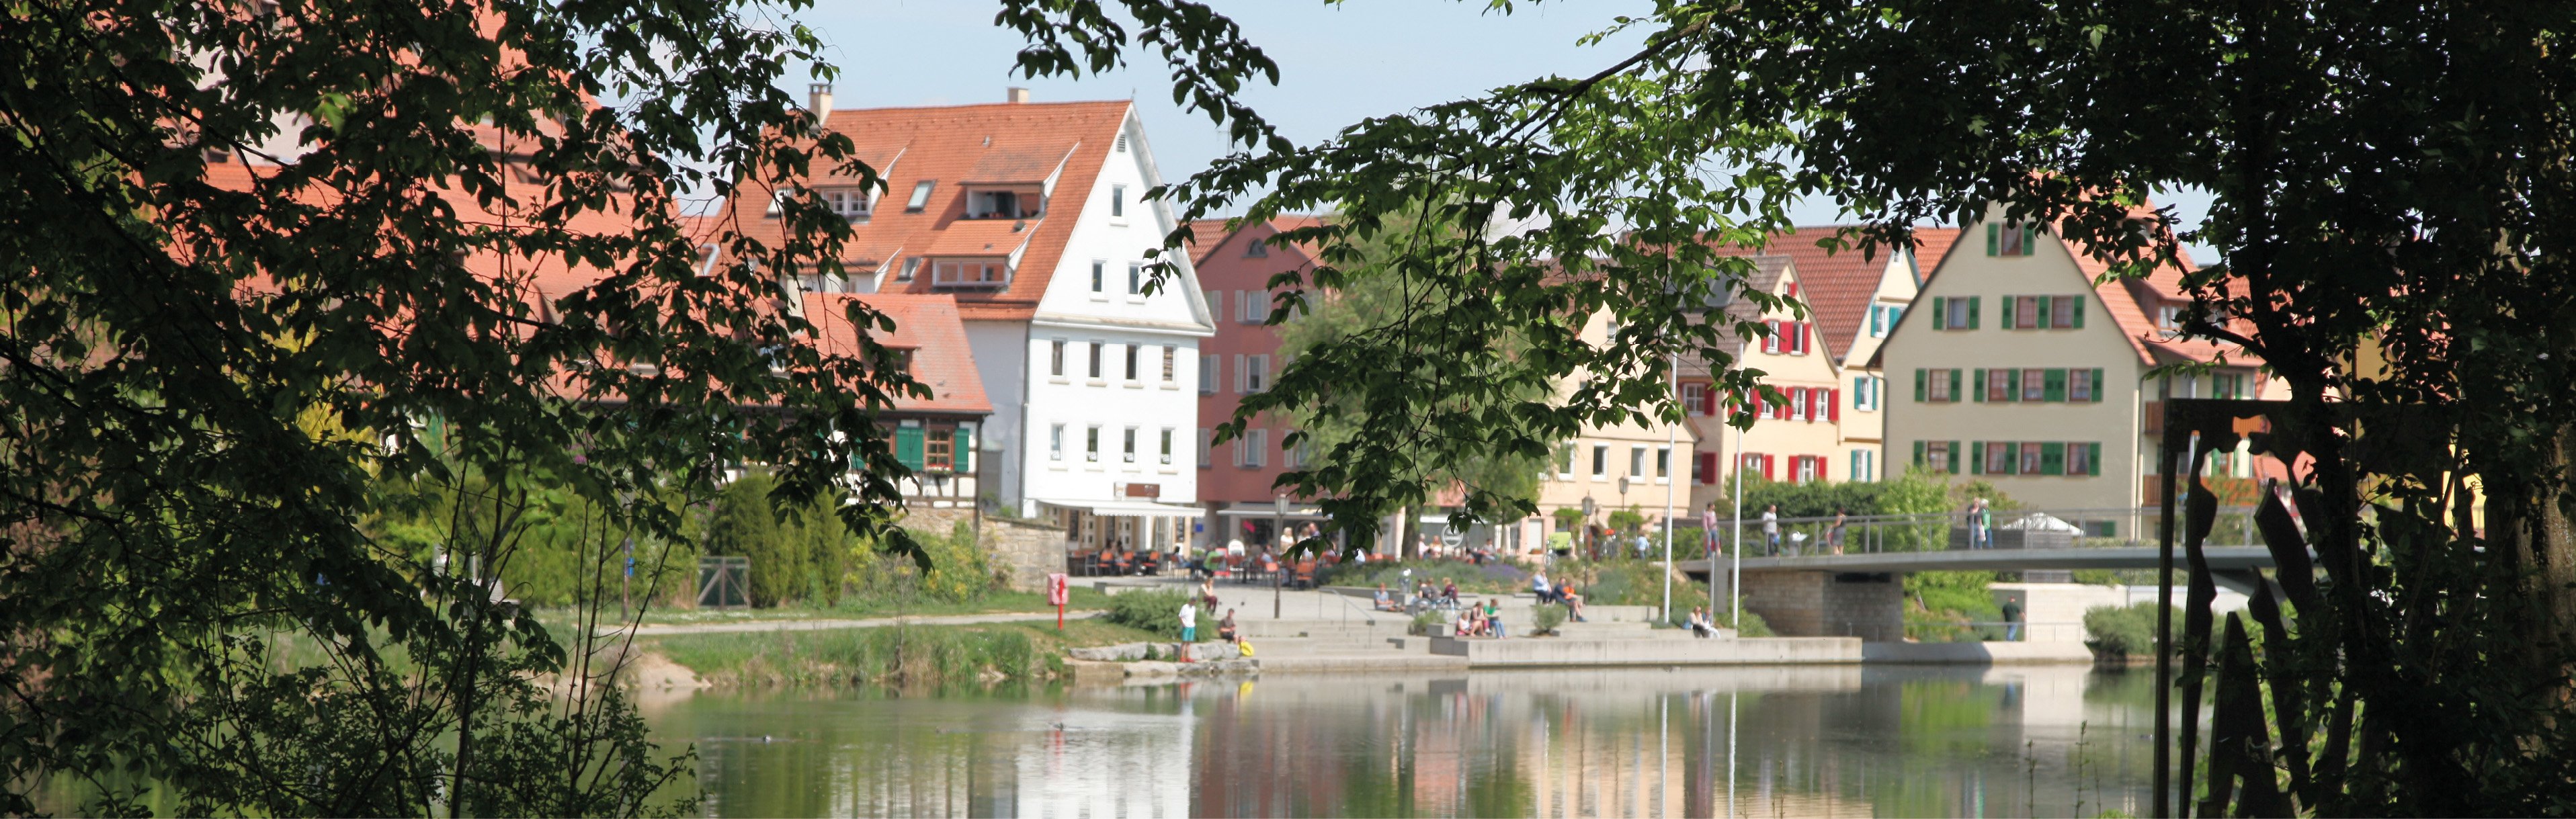 Blick aufs Neckarufer mit Nepomukhaus